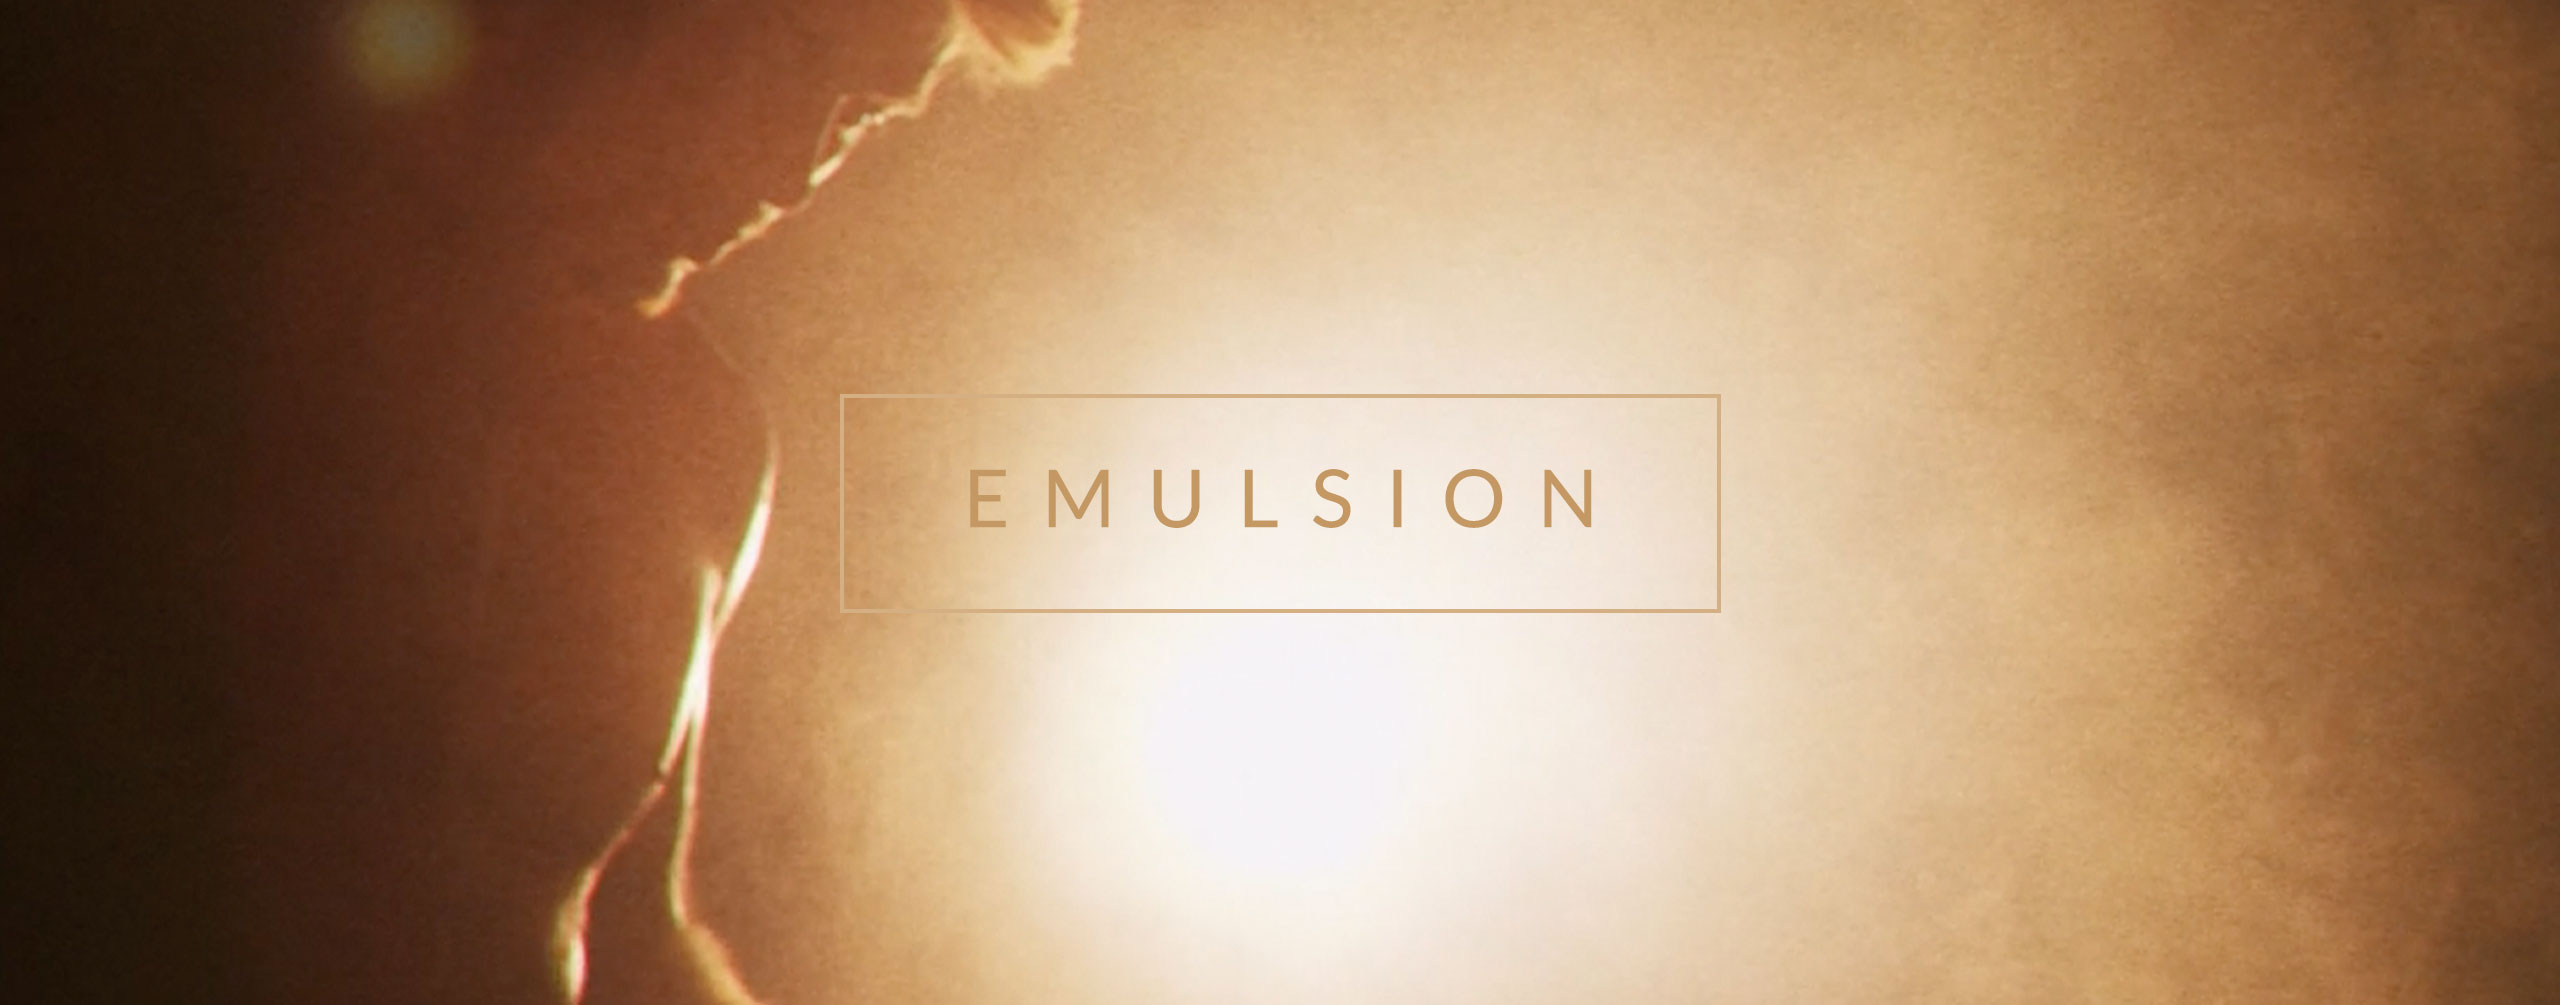 Emulsion - Film Grain Overlays